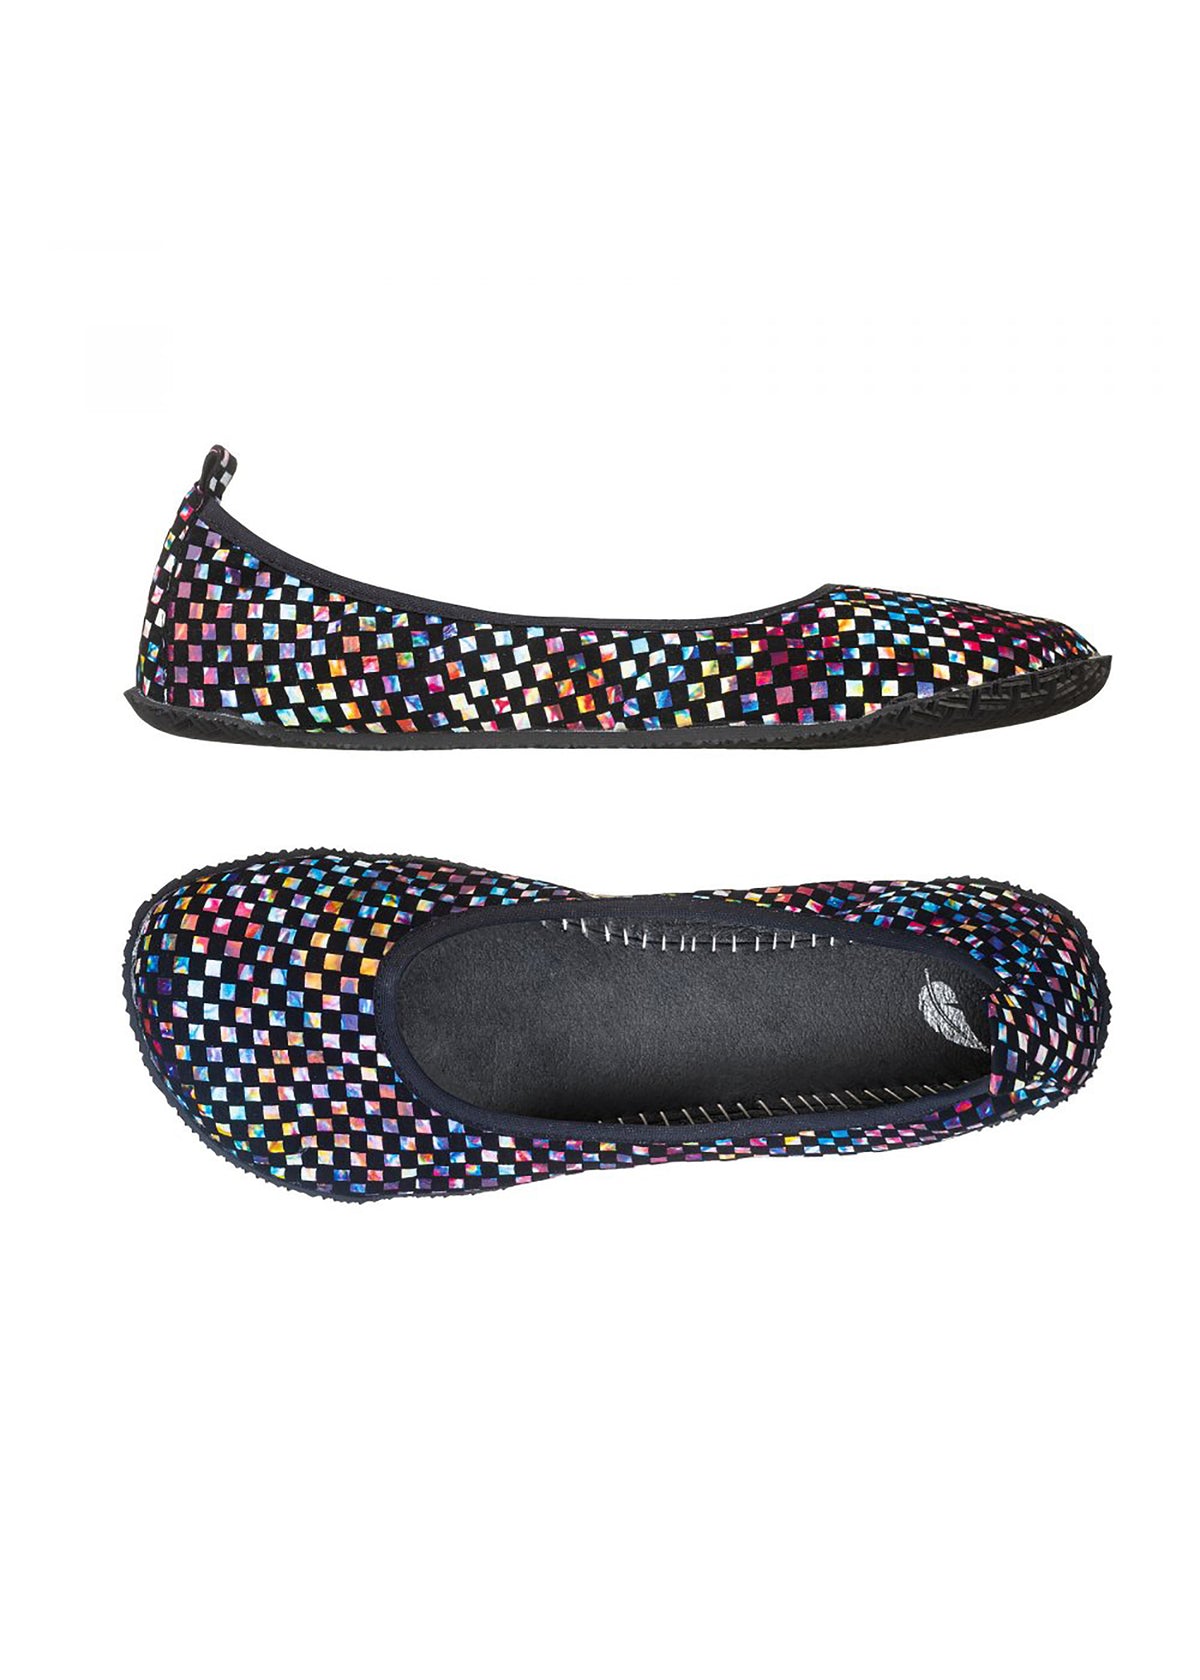 Barefoot shoes, ballerinas - Petite Joy, multicolored leather